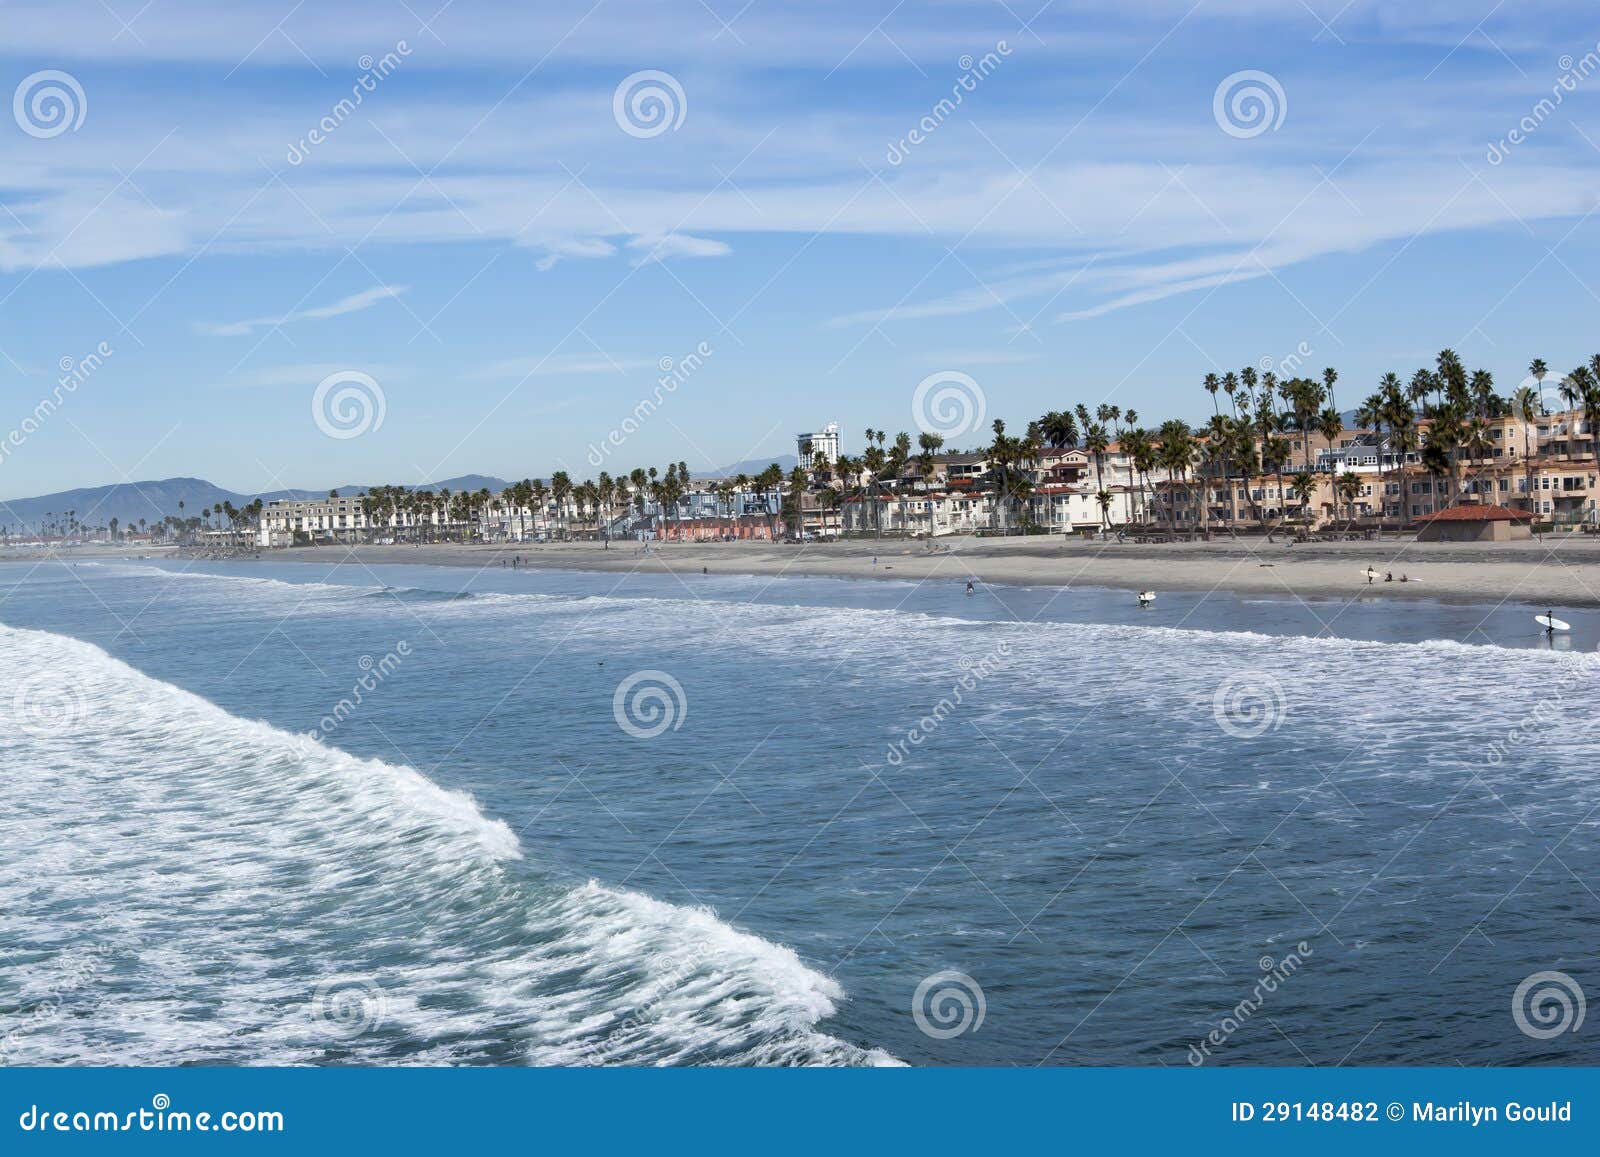 beach front oceanside california